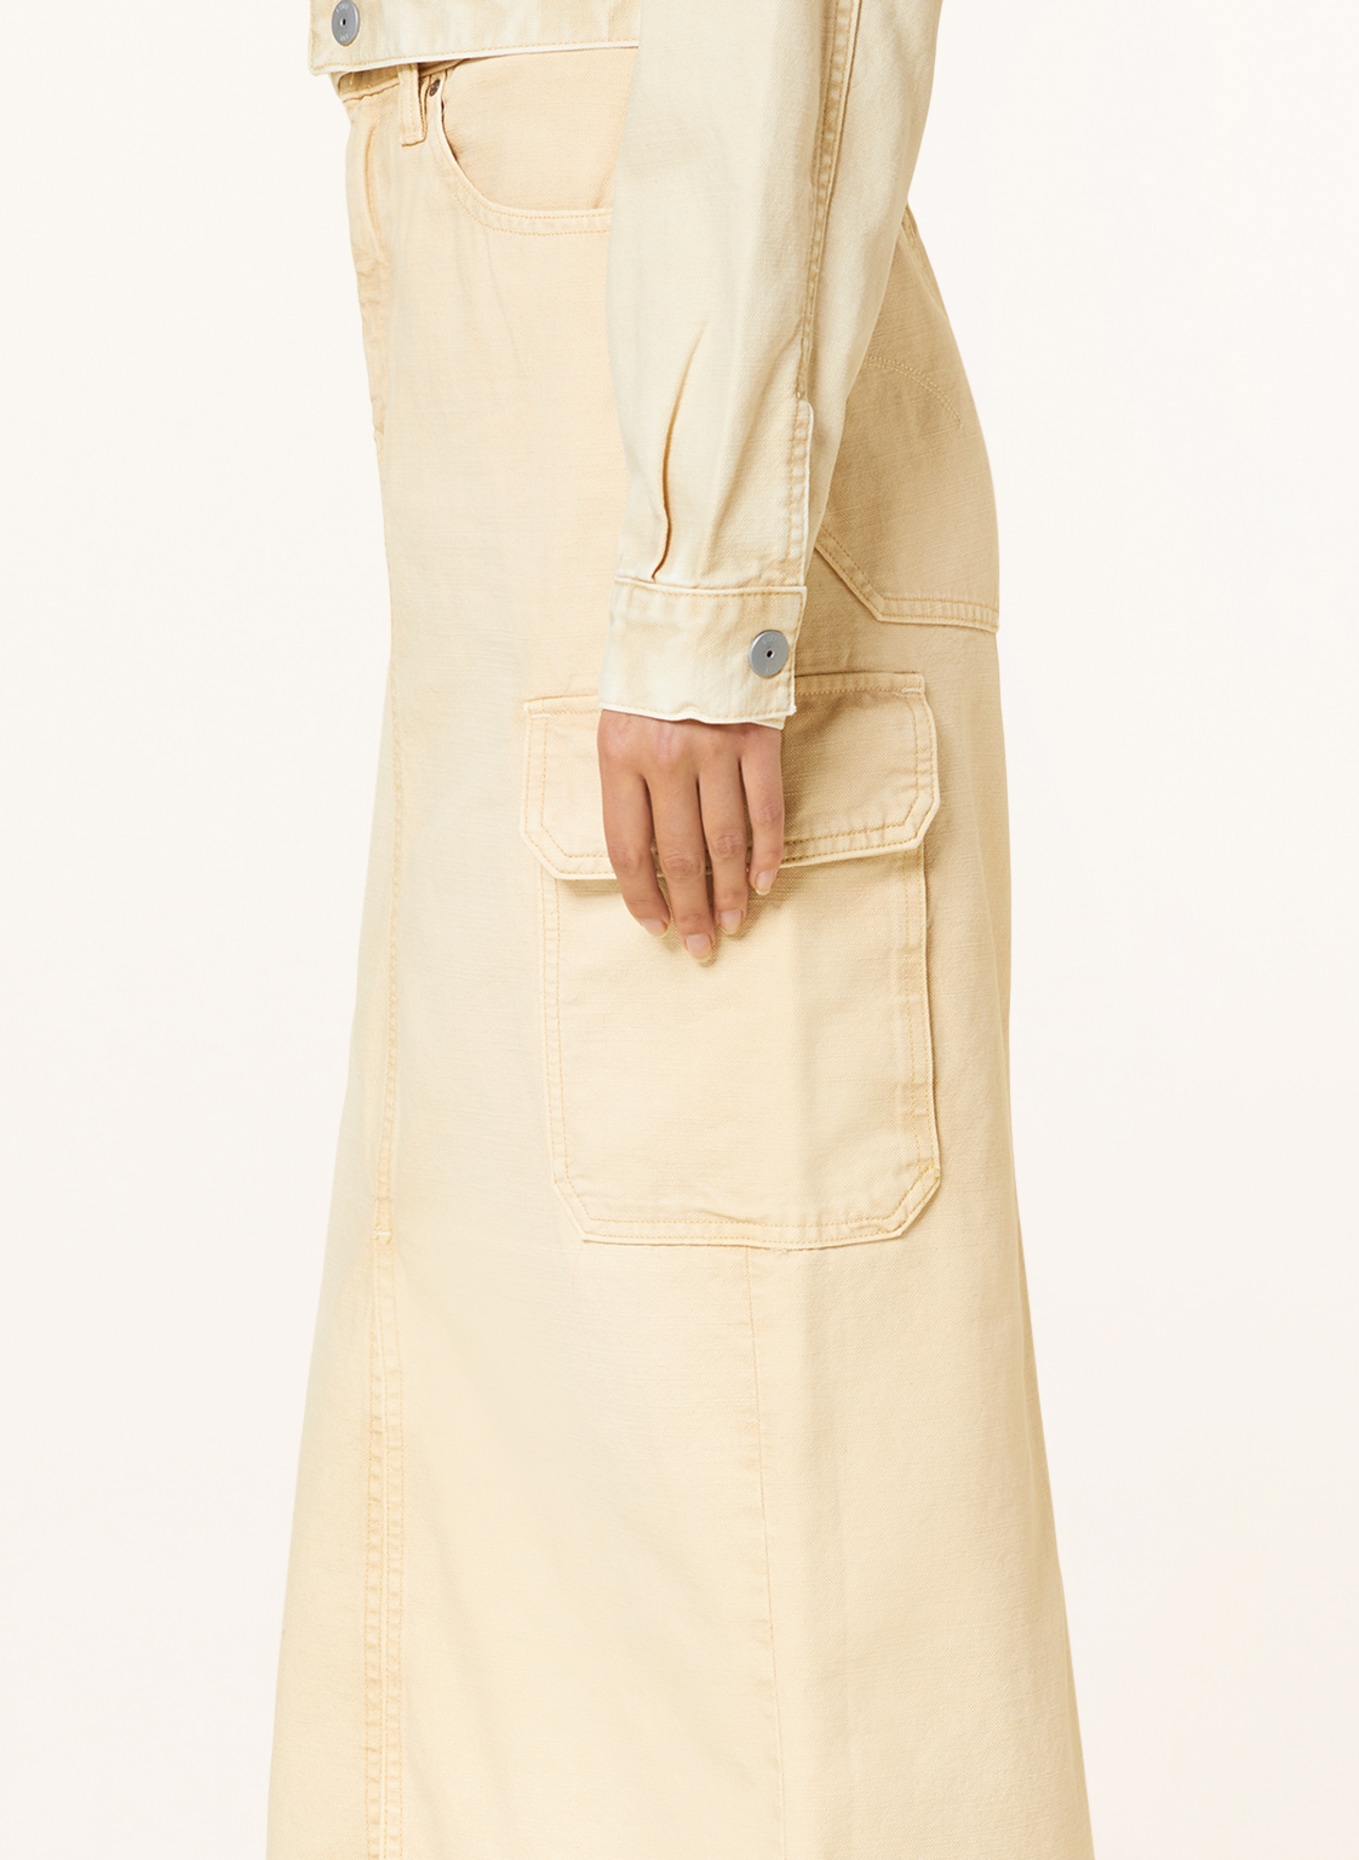 G-Star RAW Denim skirt VIKTORIA, Color: G553 sun faded sand gd (Image 4)